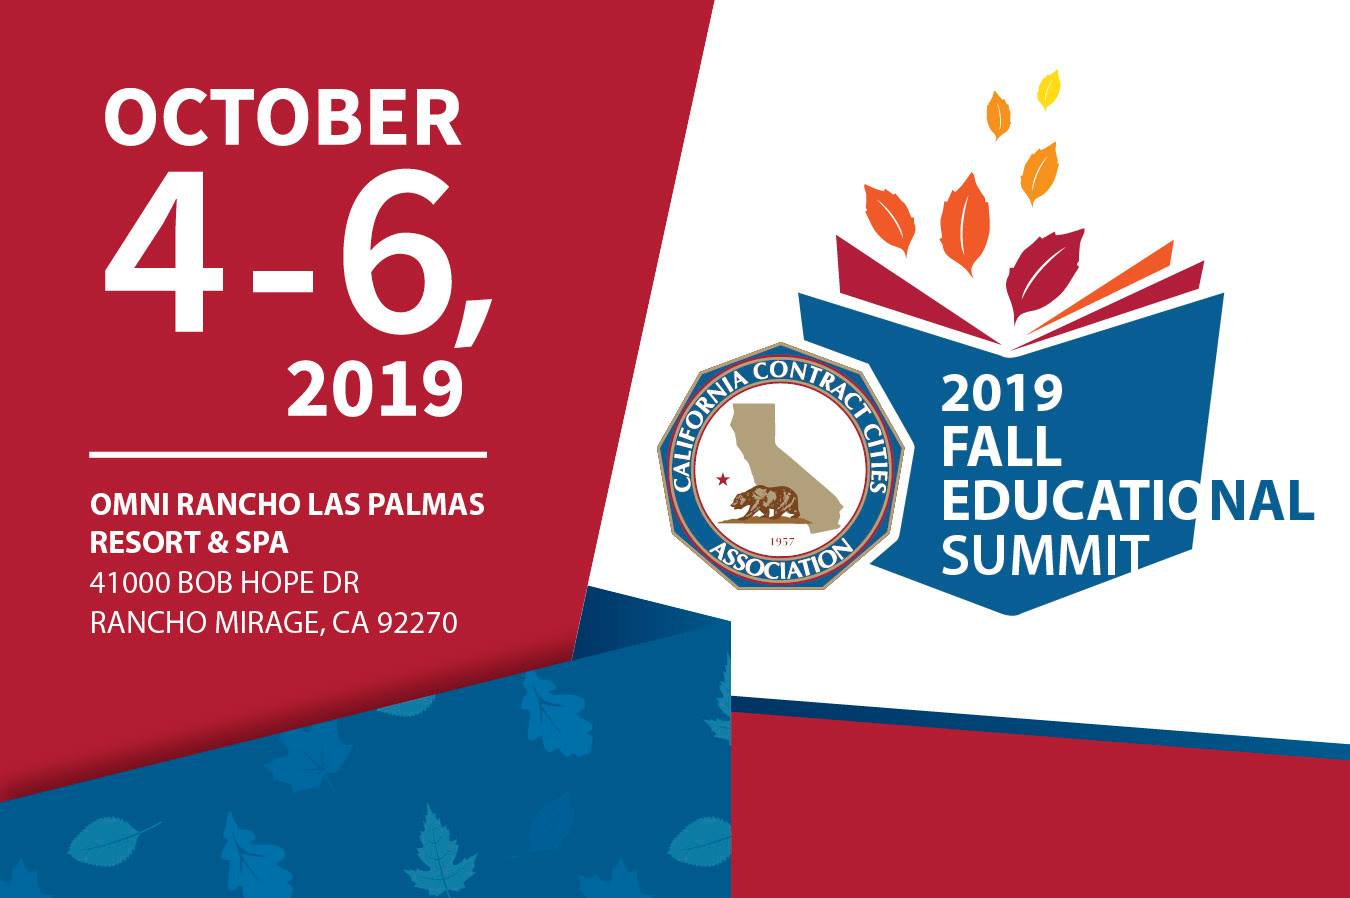 Fall Educational Summit 2019